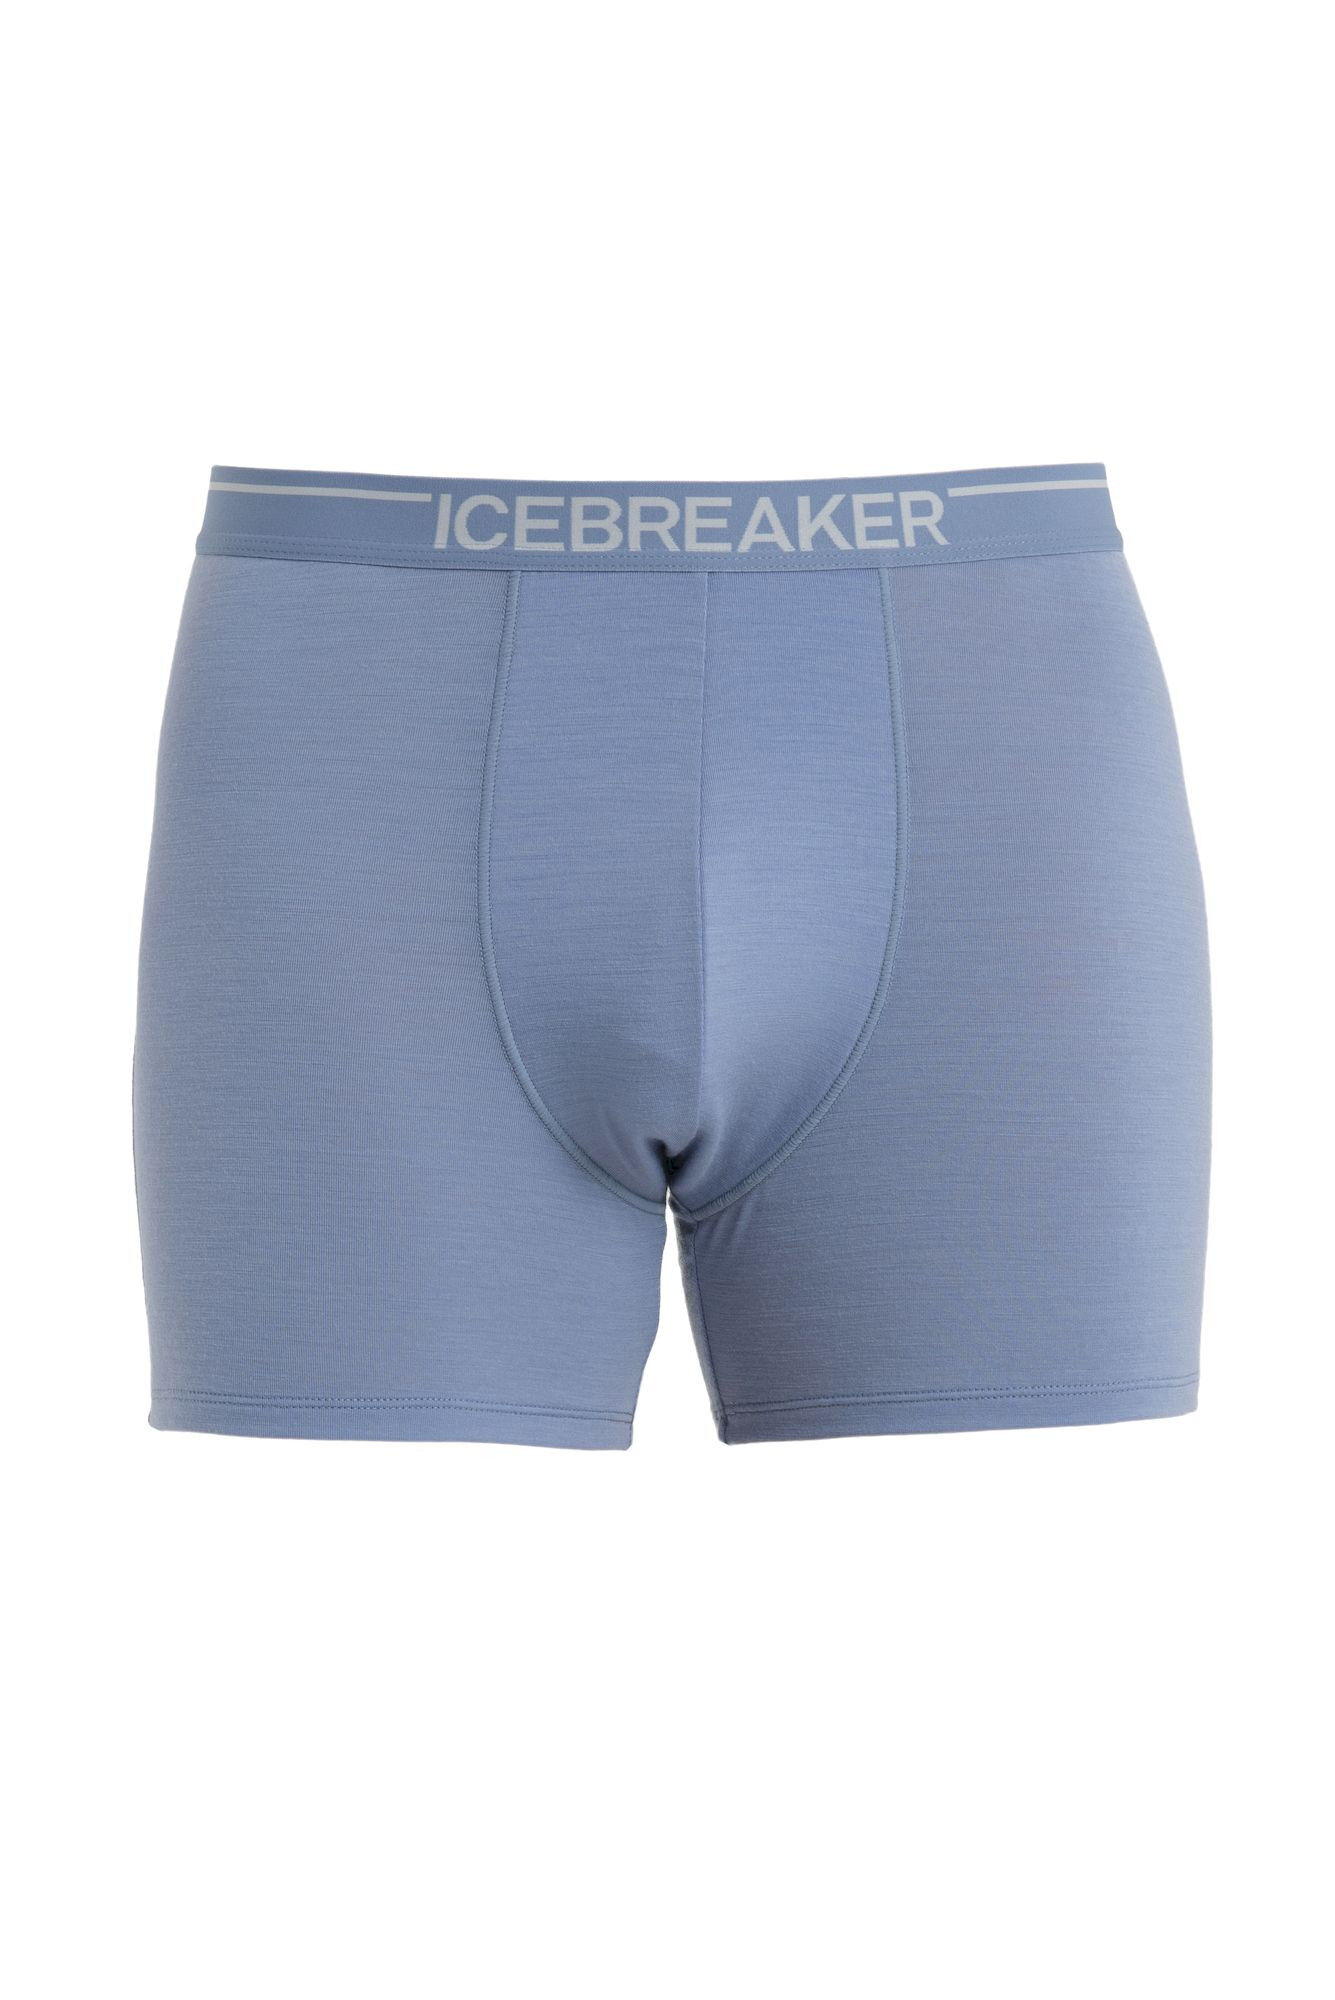 Icebreaker Anatomica Boxers - Ondergoed